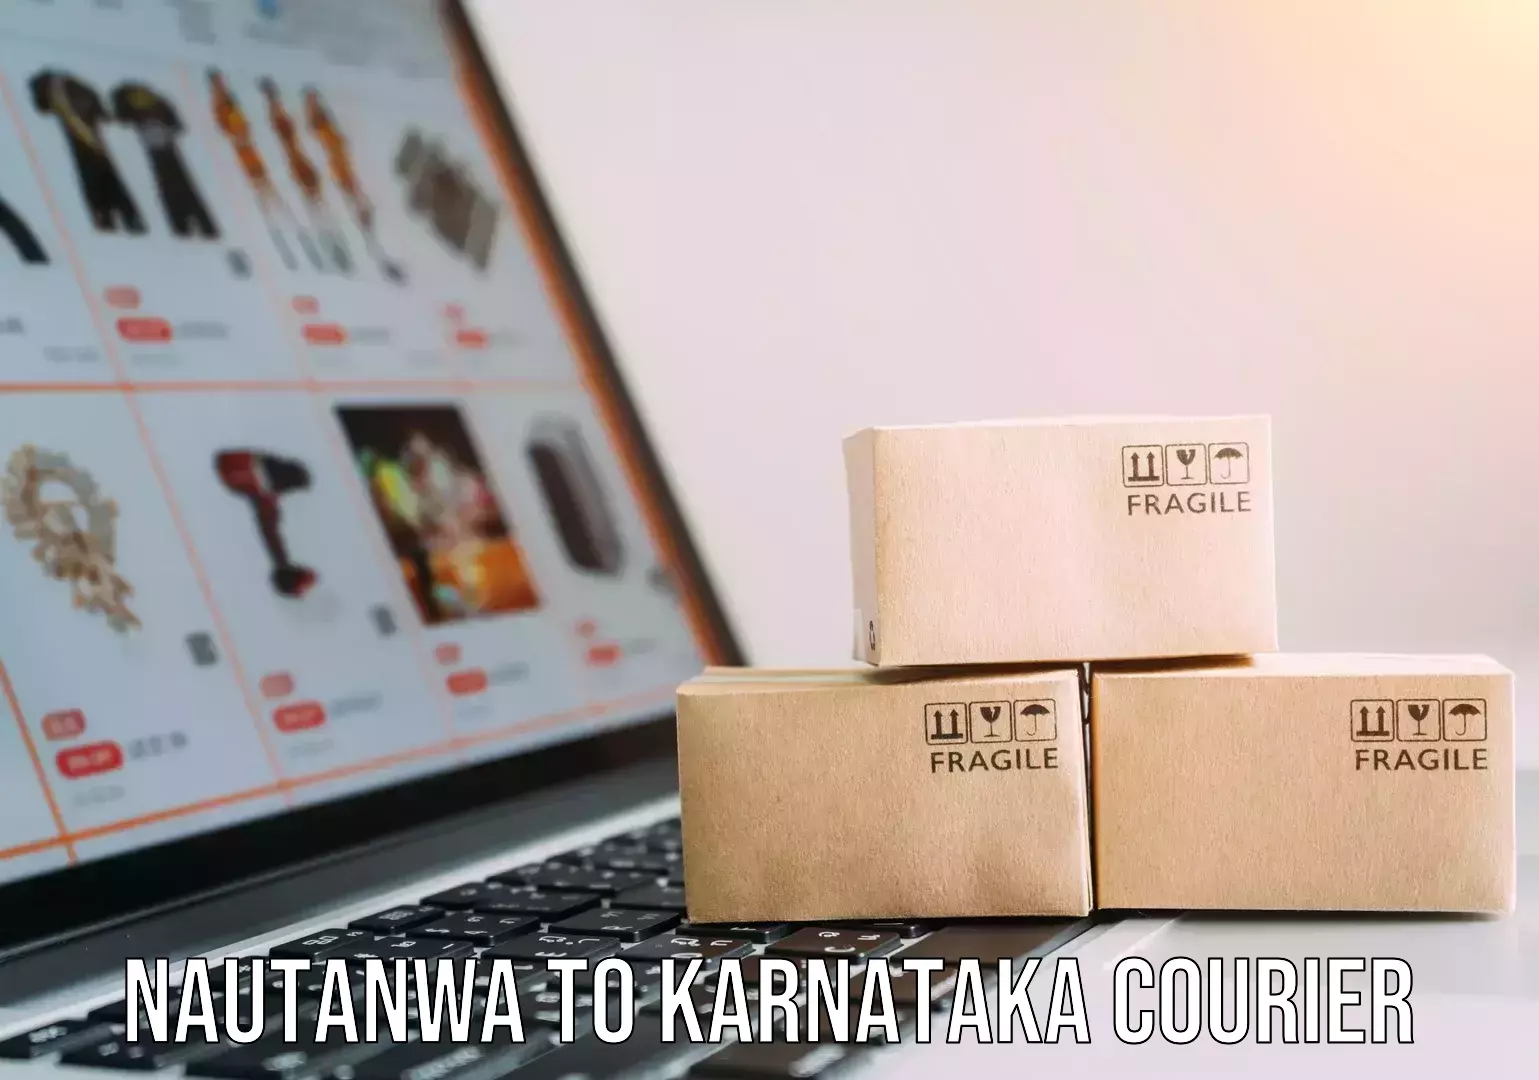 Professional moving company Nautanwa to Karnataka